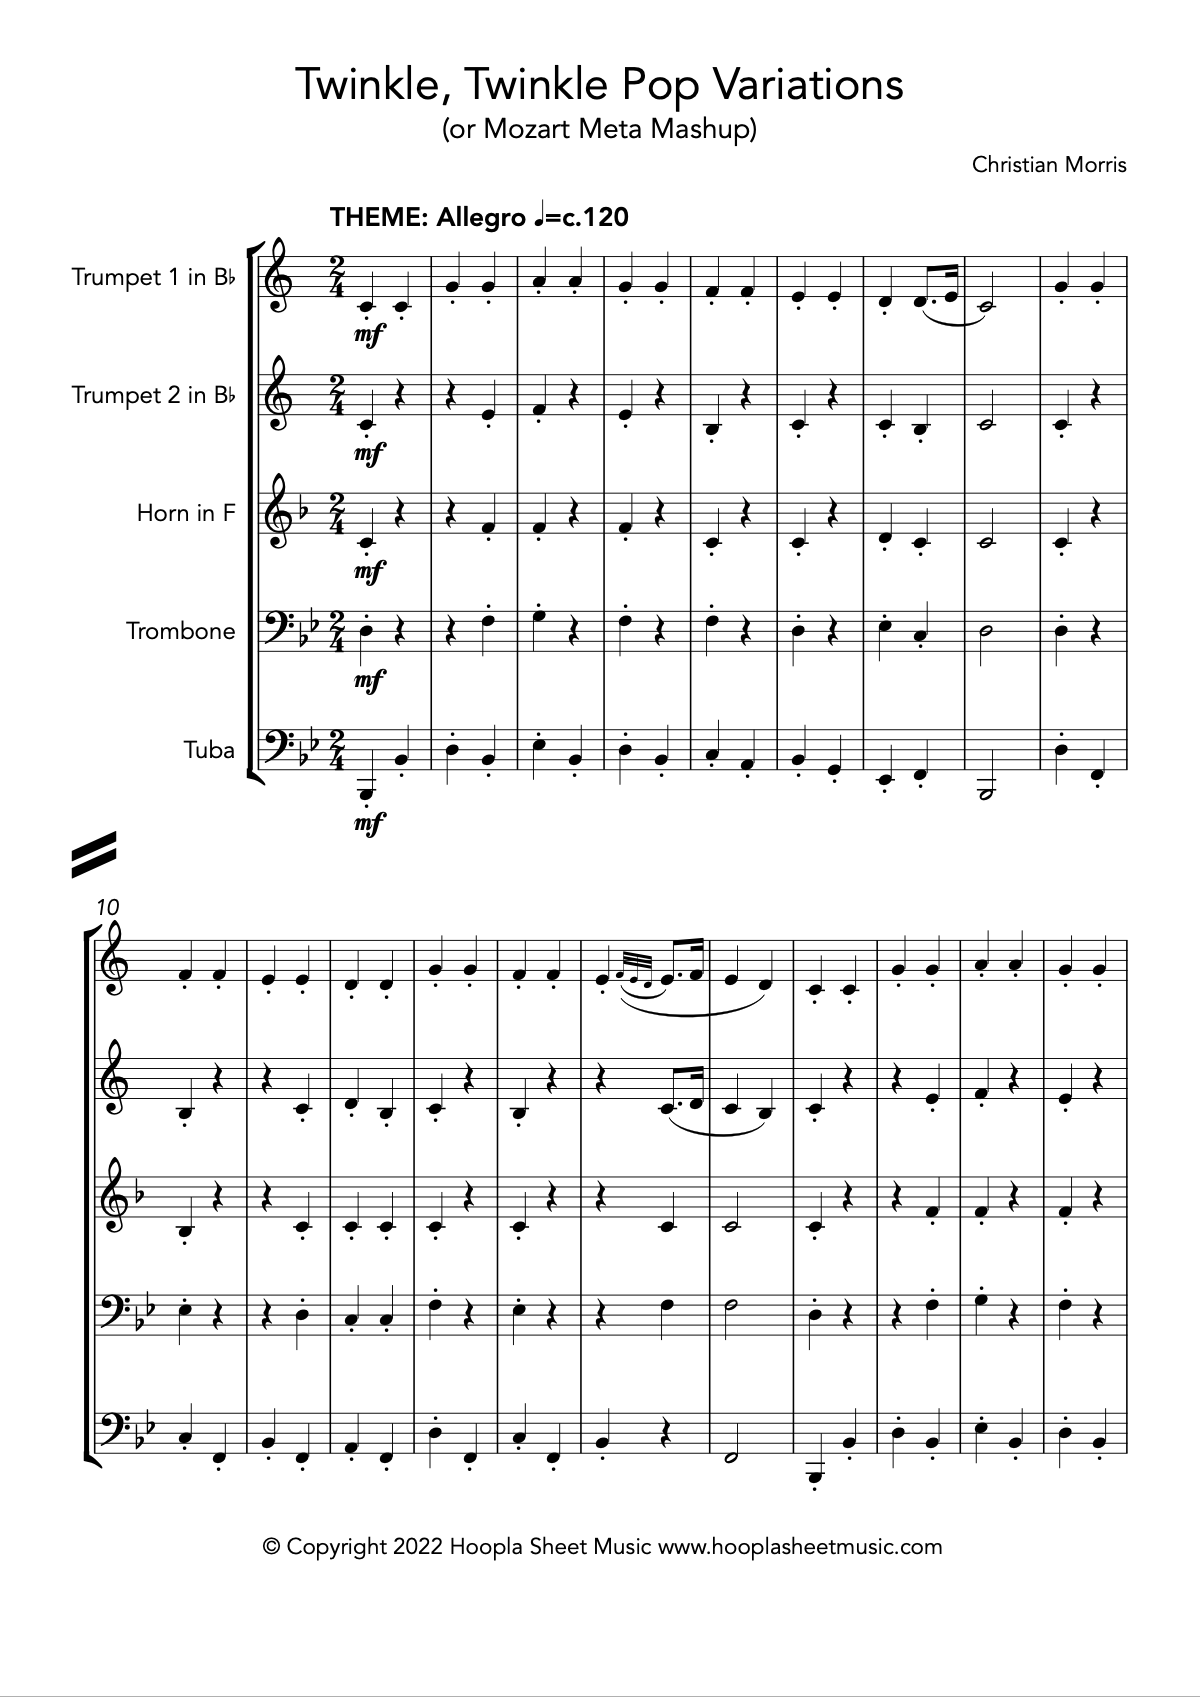 Twinkle, Twinkle Pop Variations (Twinkle, Twinkle Little Star) for Brass Quintet